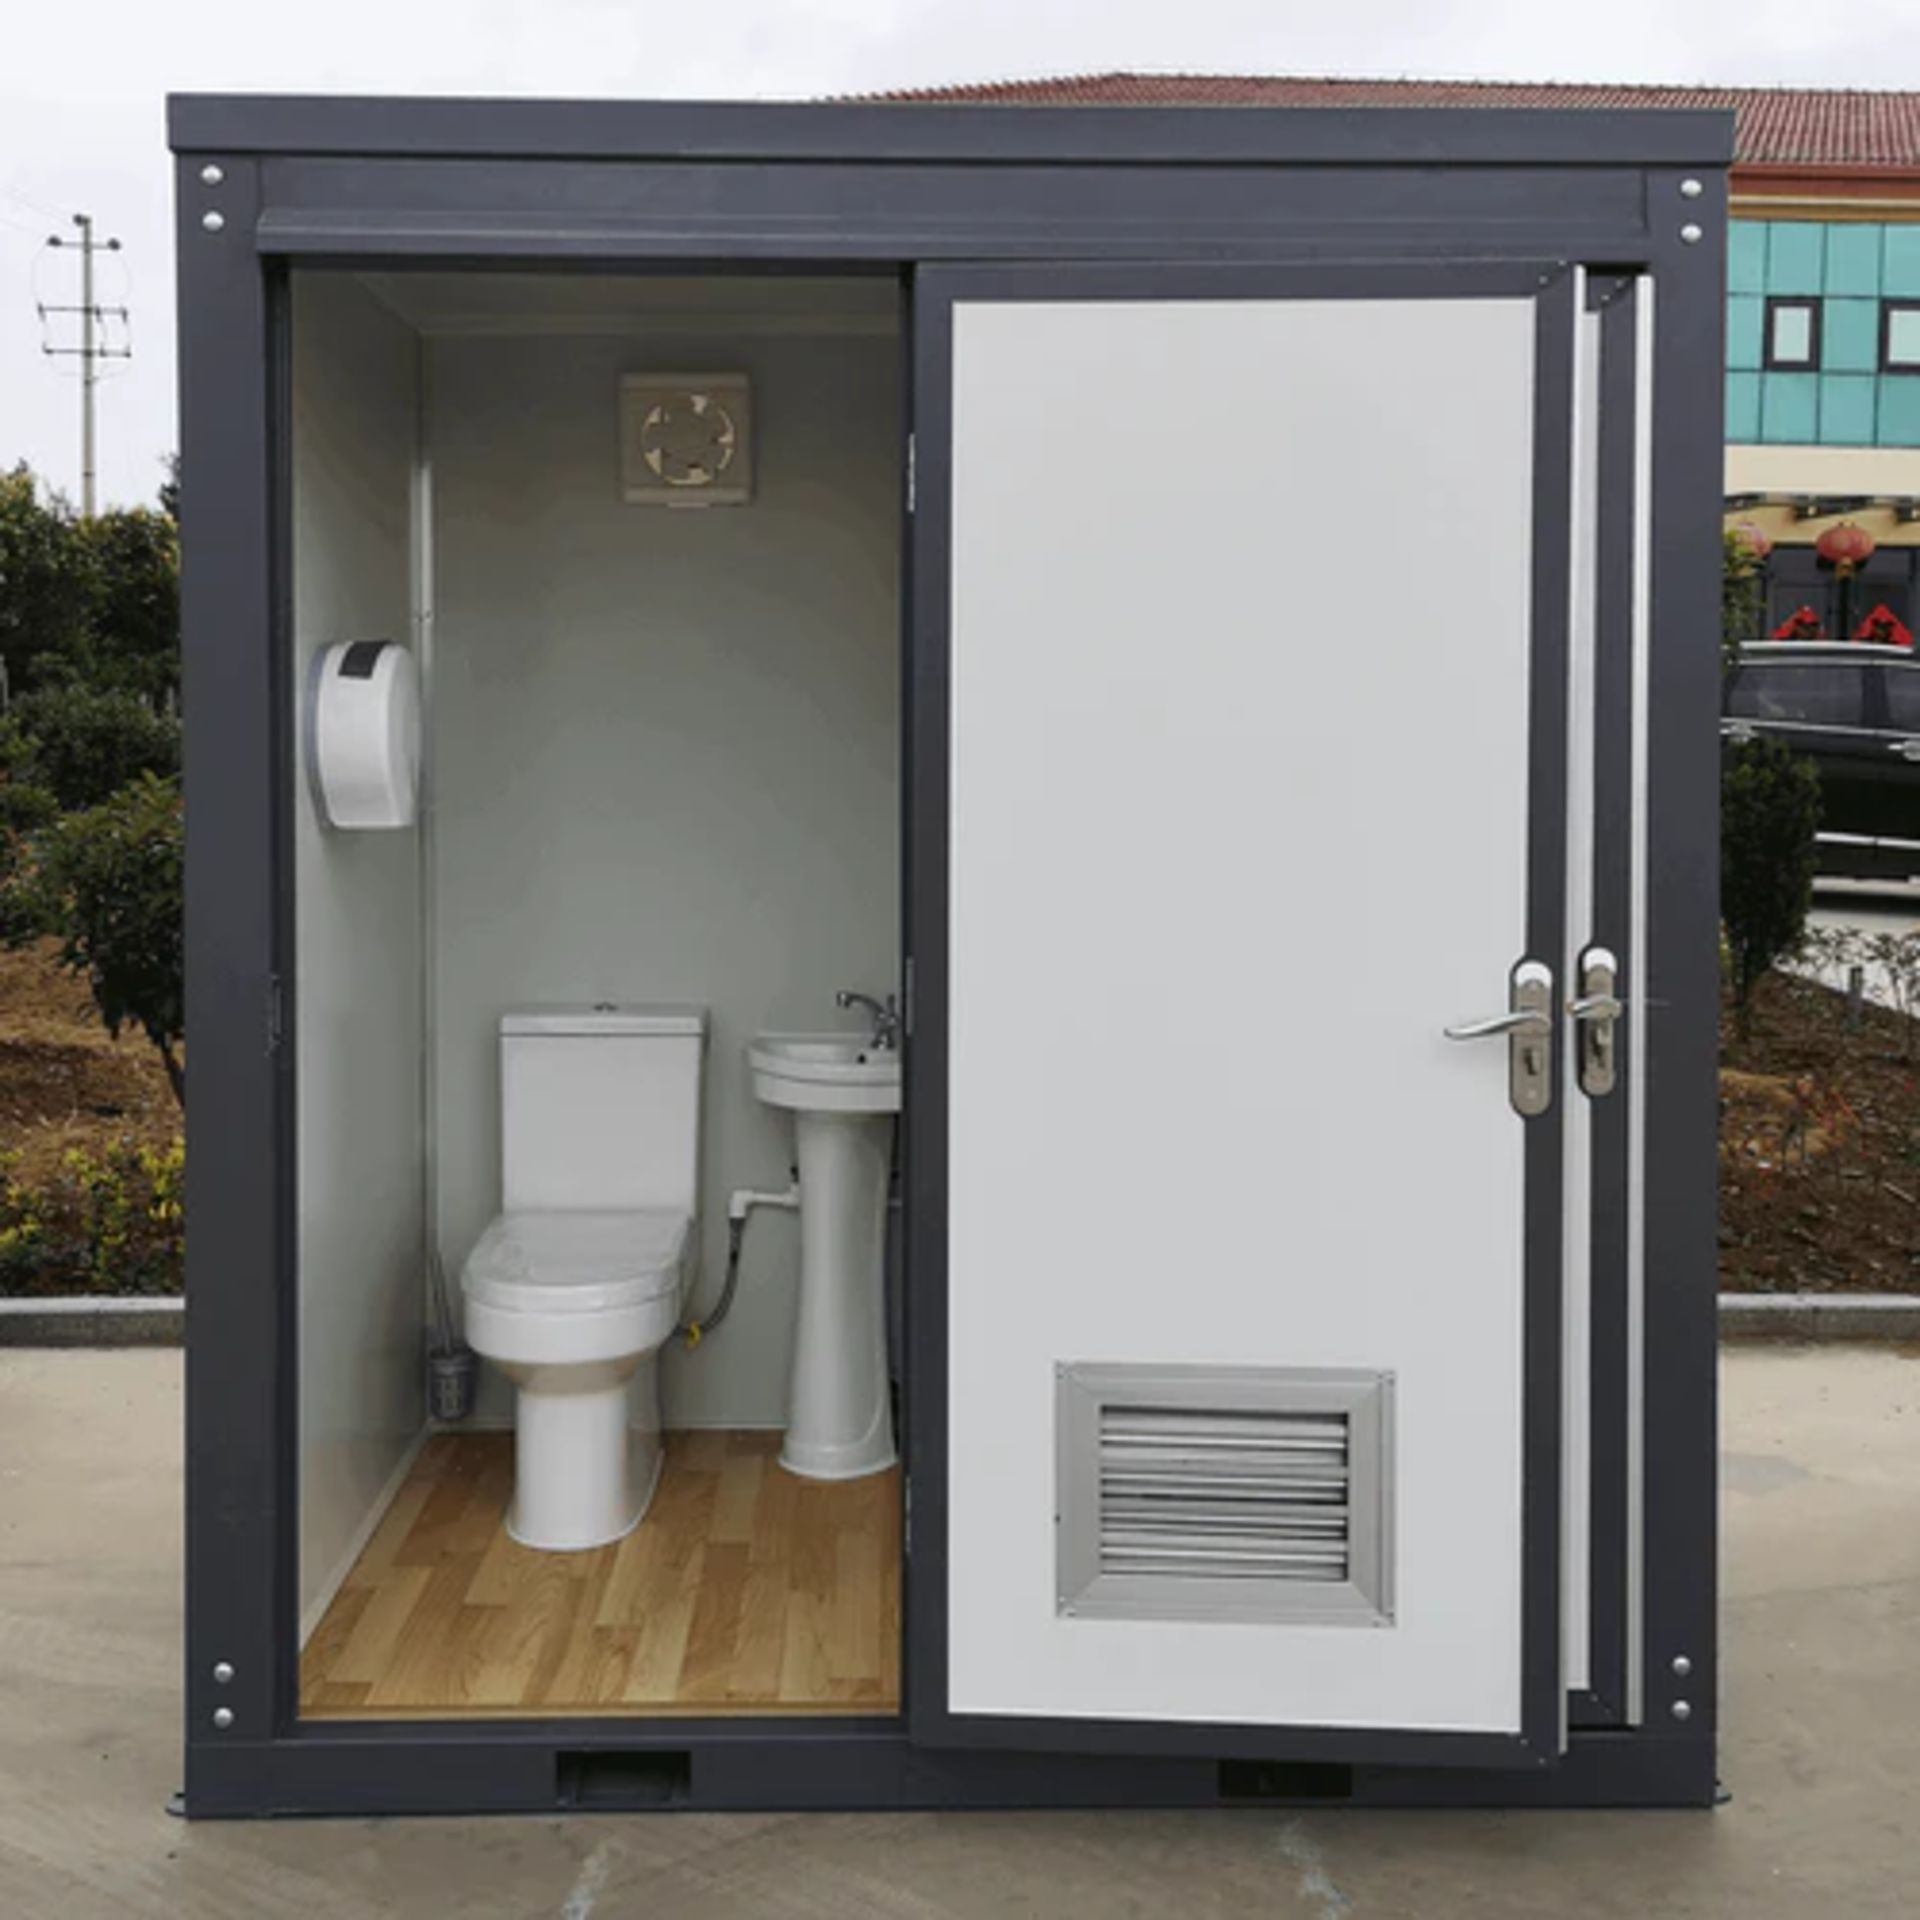 Bastone Mobile Double Toilet w/ Sink - Image 6 of 9